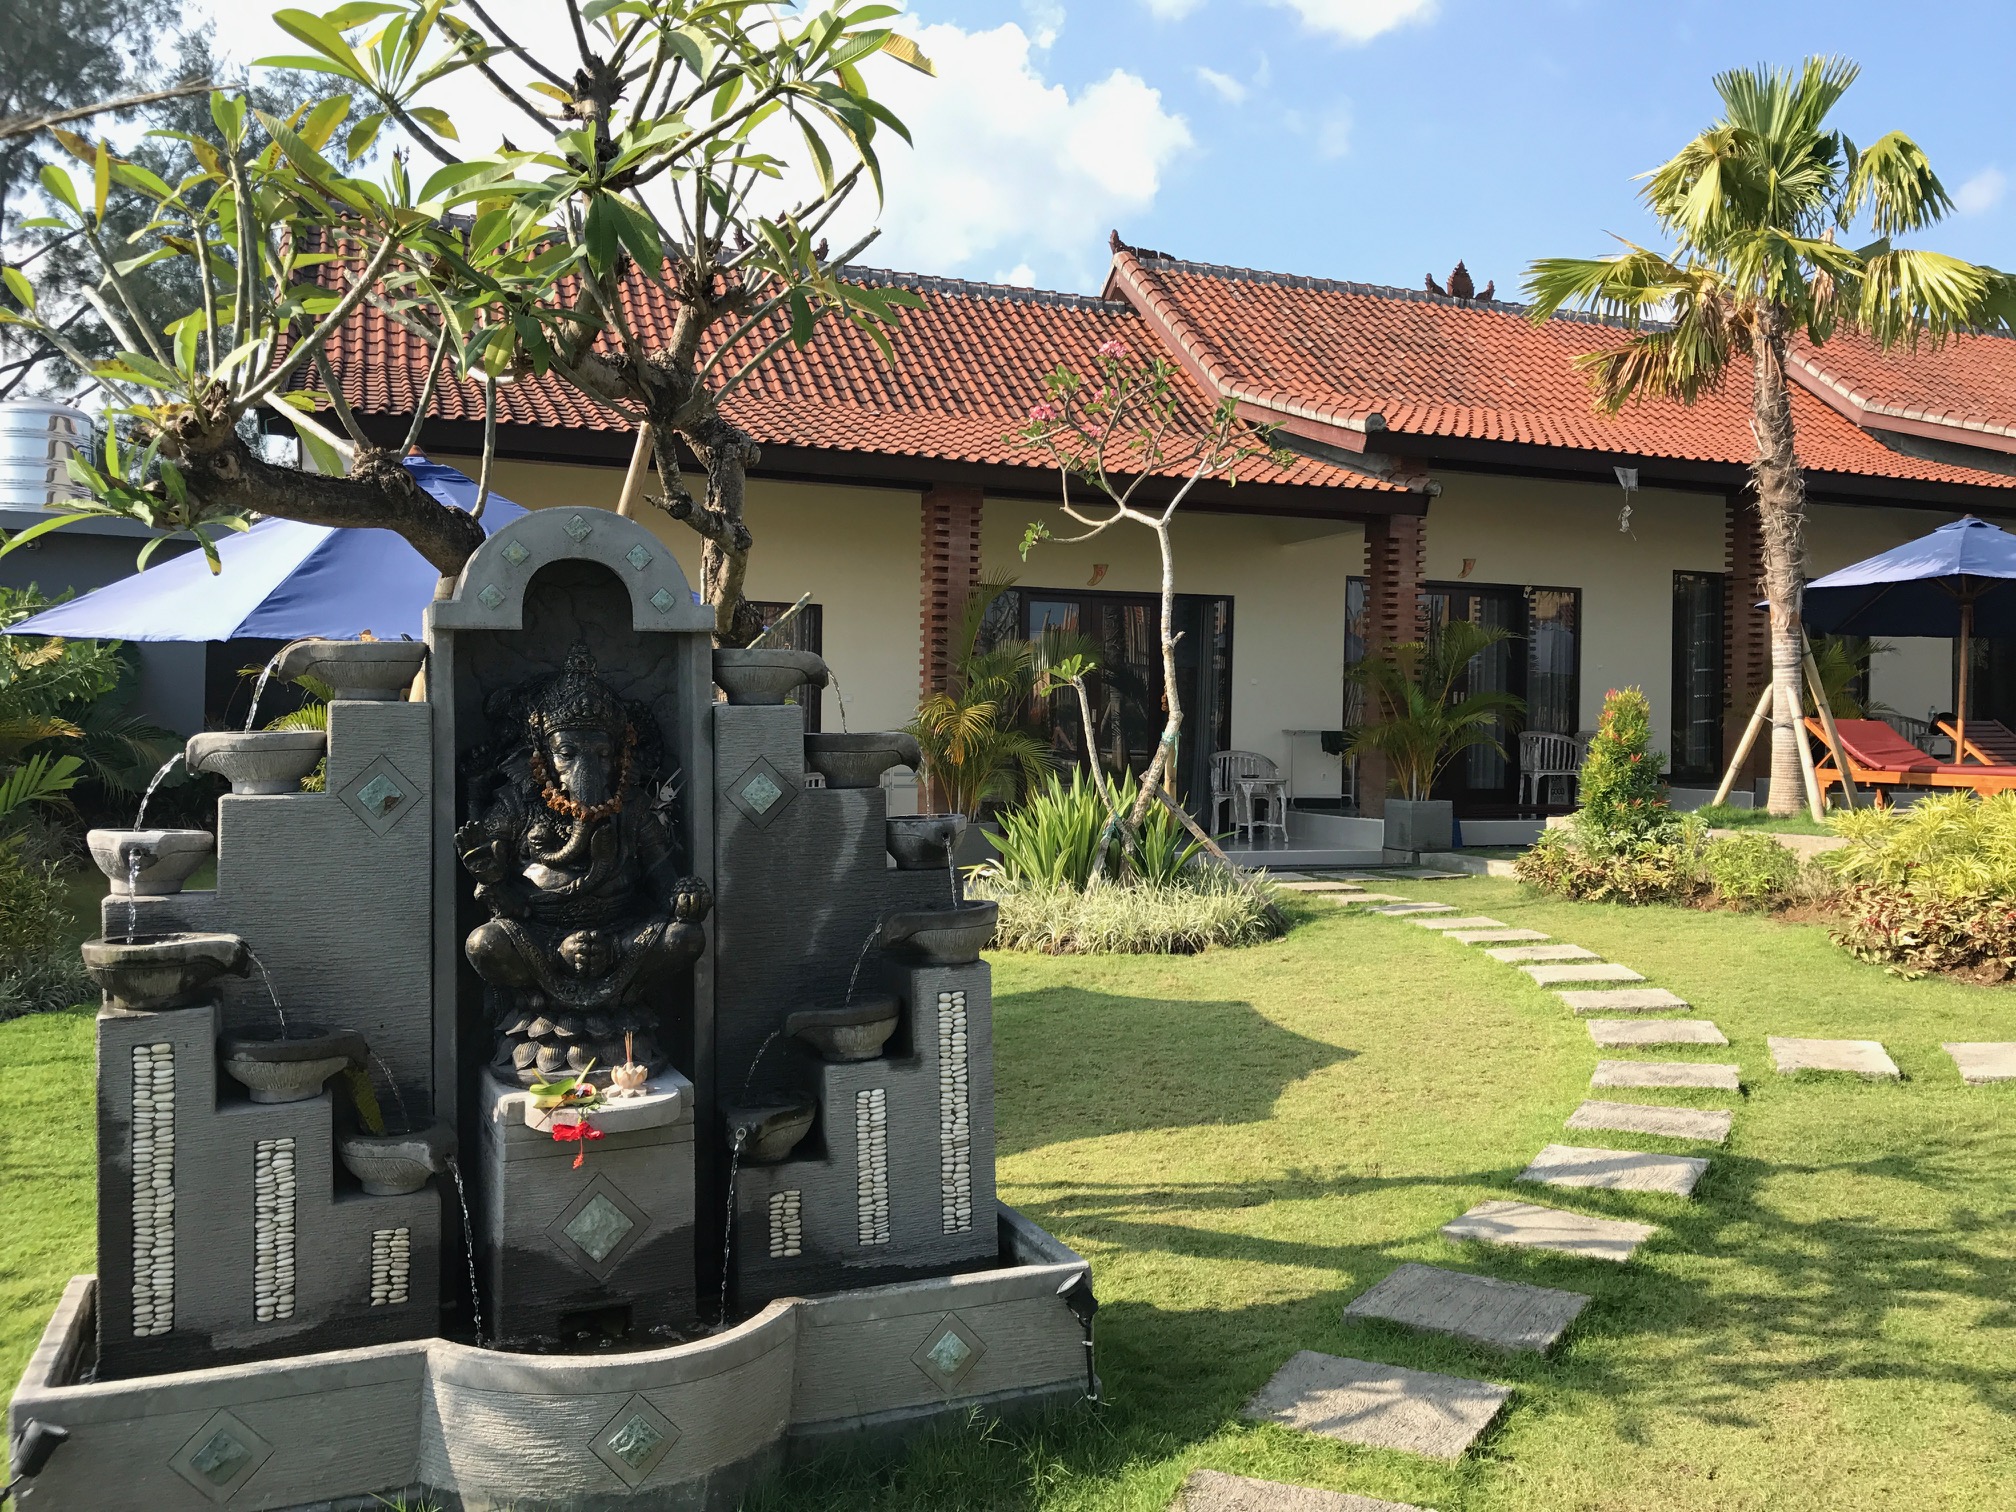 Lemon Guesthouse, Canggu Bali tips